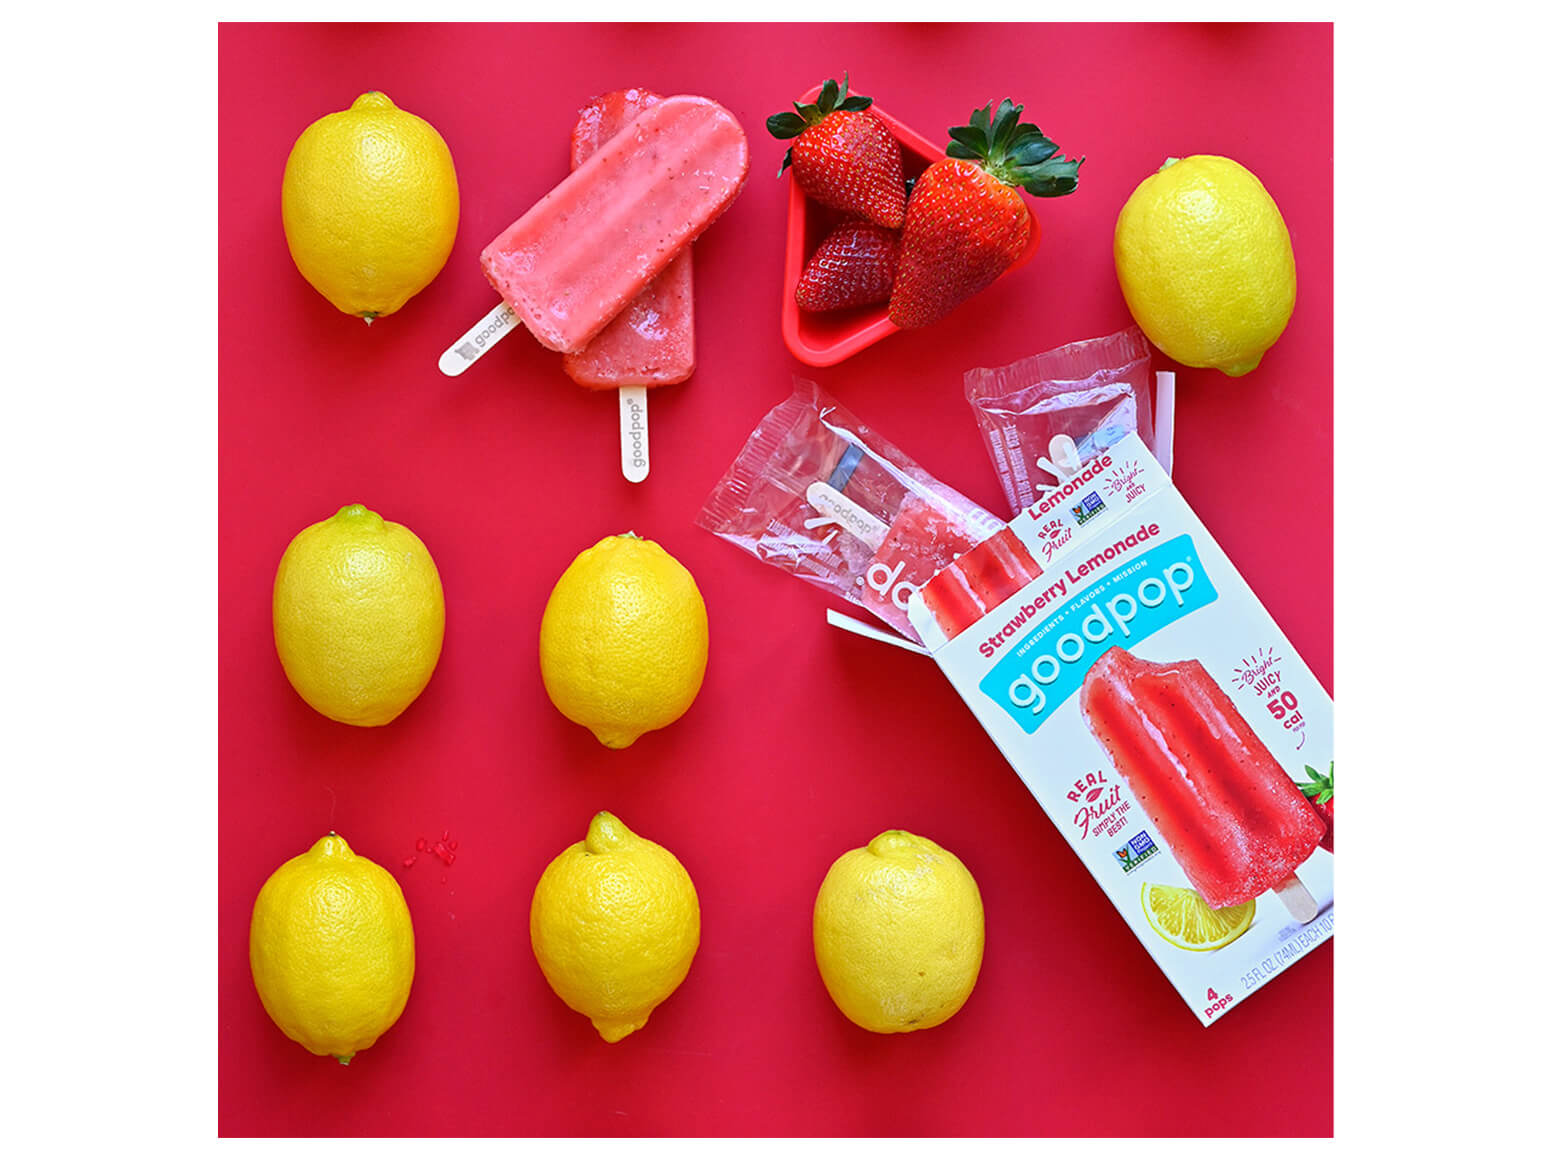  GoodPop Organic Freezer Pops - Cherry Limeaide, Fruit Punch,  Grape, 100% Juice, No Added Sugar - 20ct, Box : Grocery & Gourmet Food